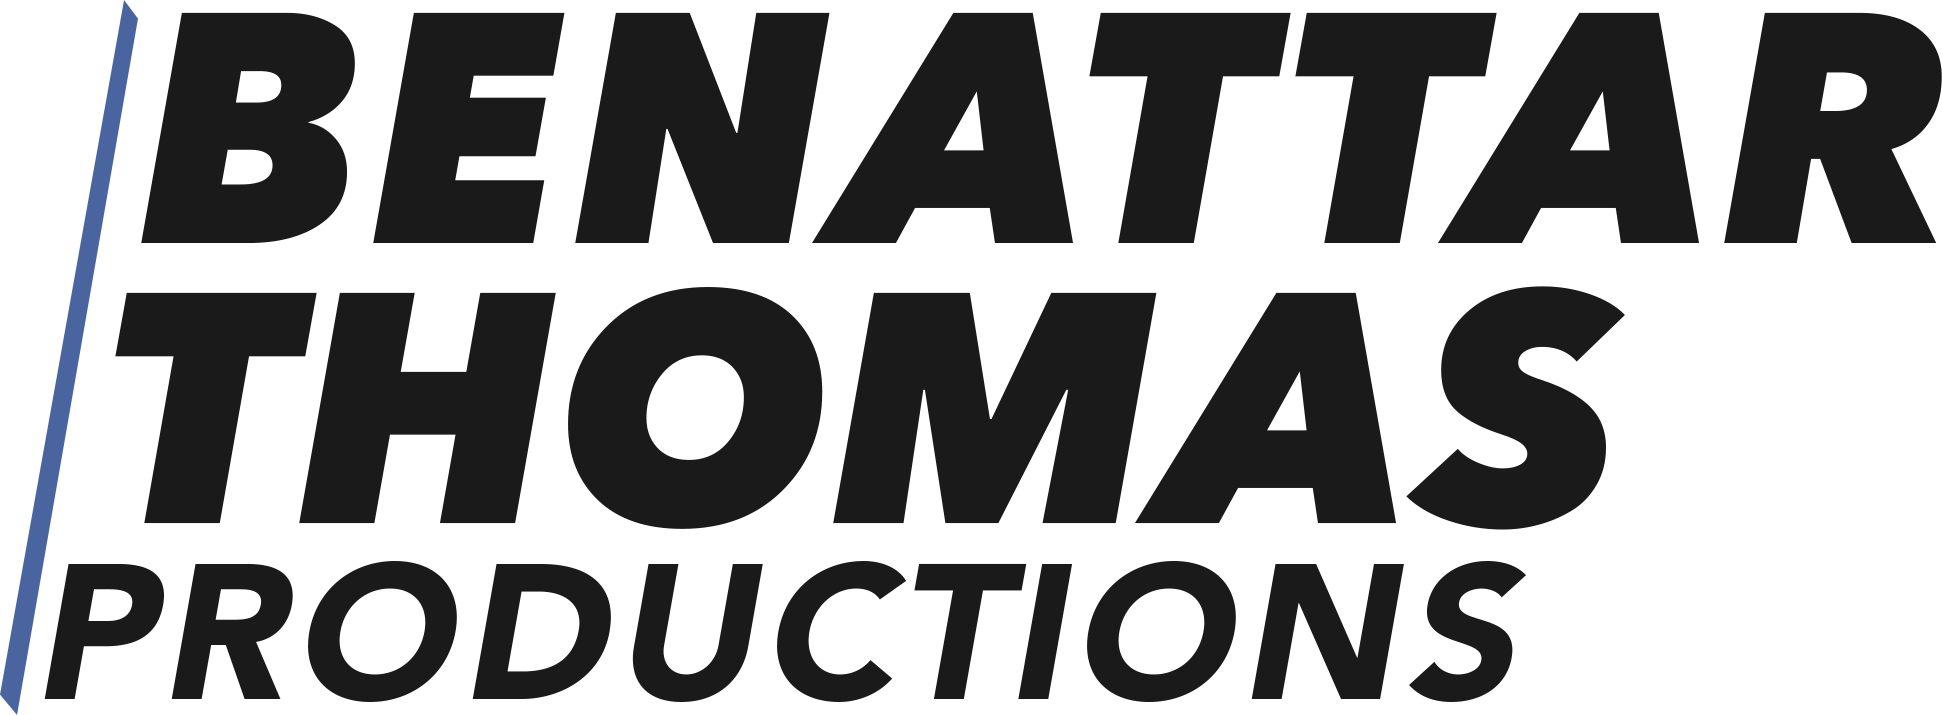 Benattar/Thomas Productions